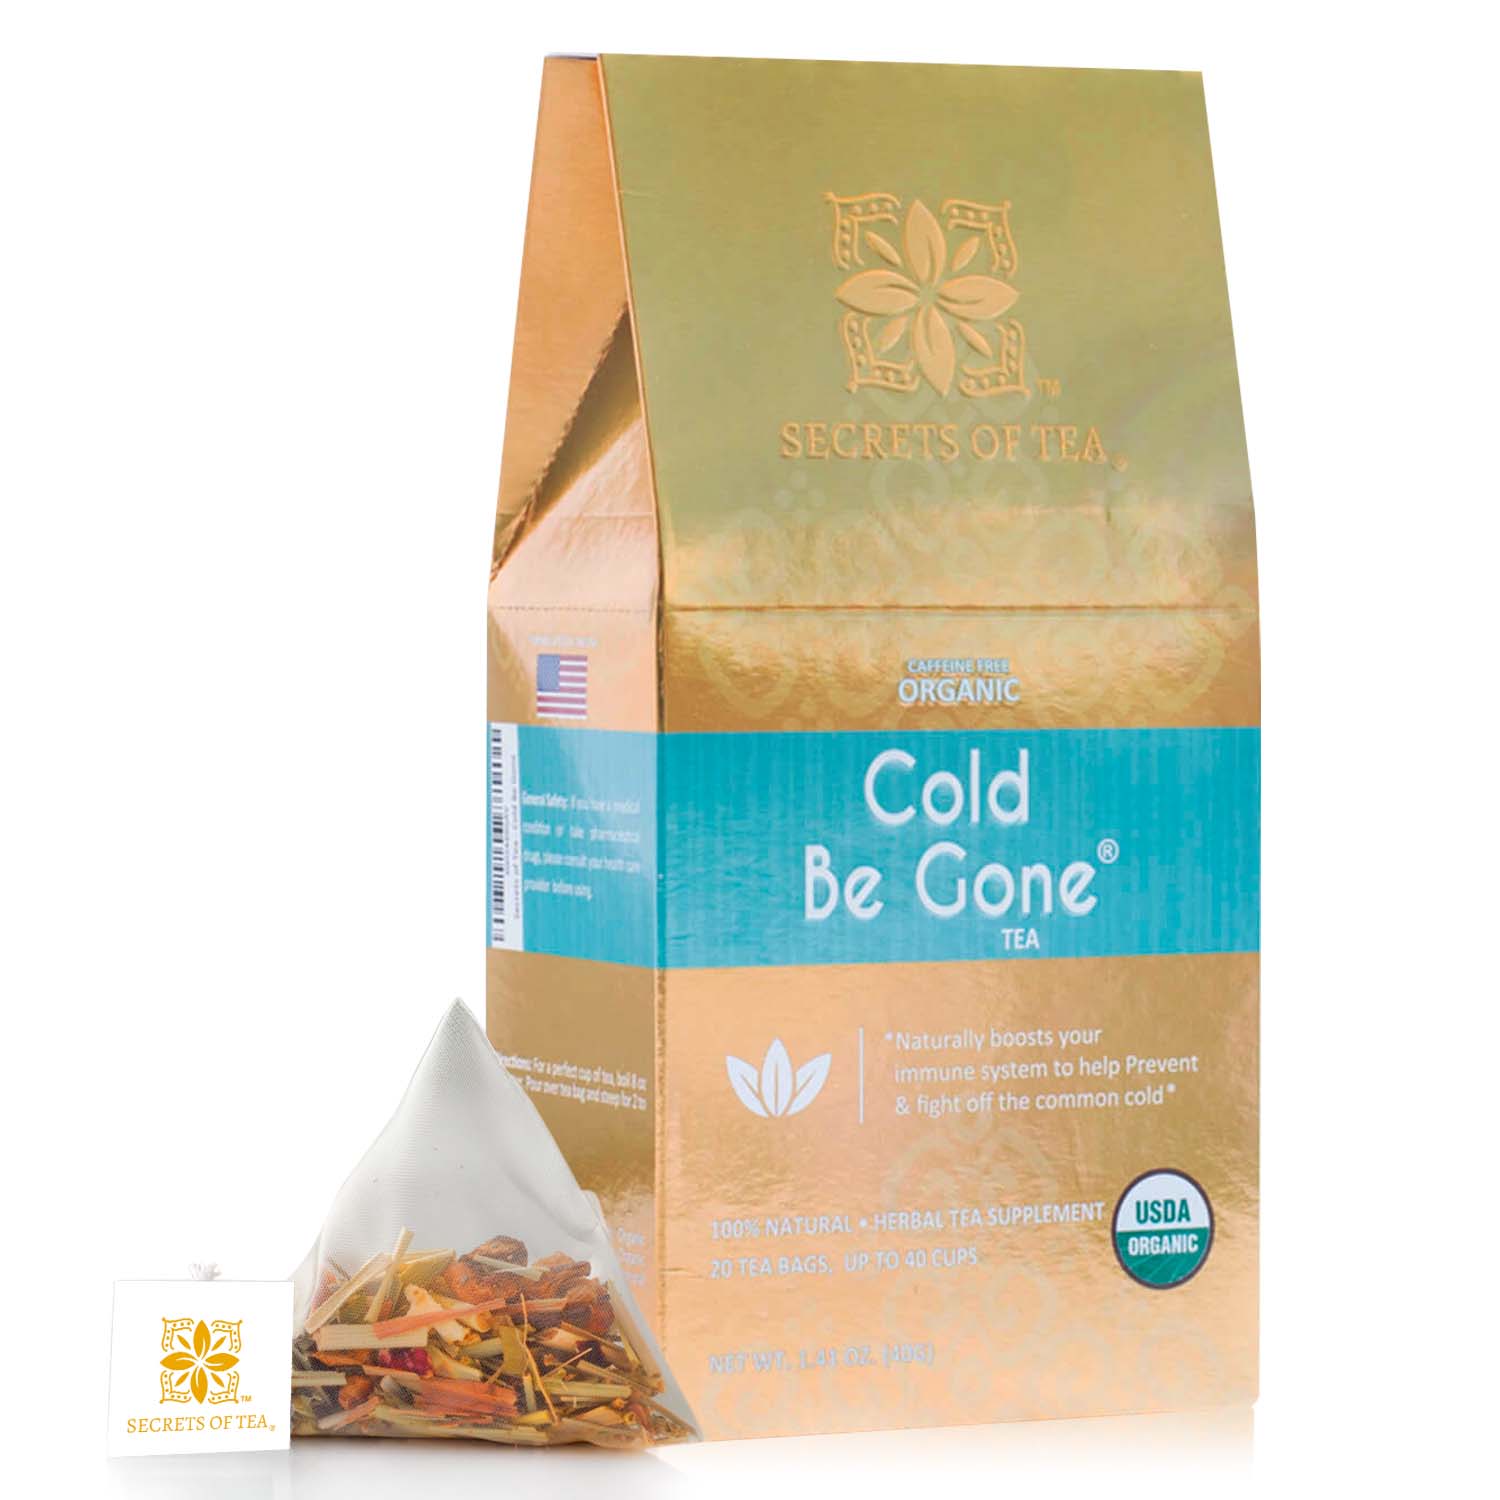 Secrets of Tea Cold Be Gone Tea 2 innerpacks per case 2.0 oz